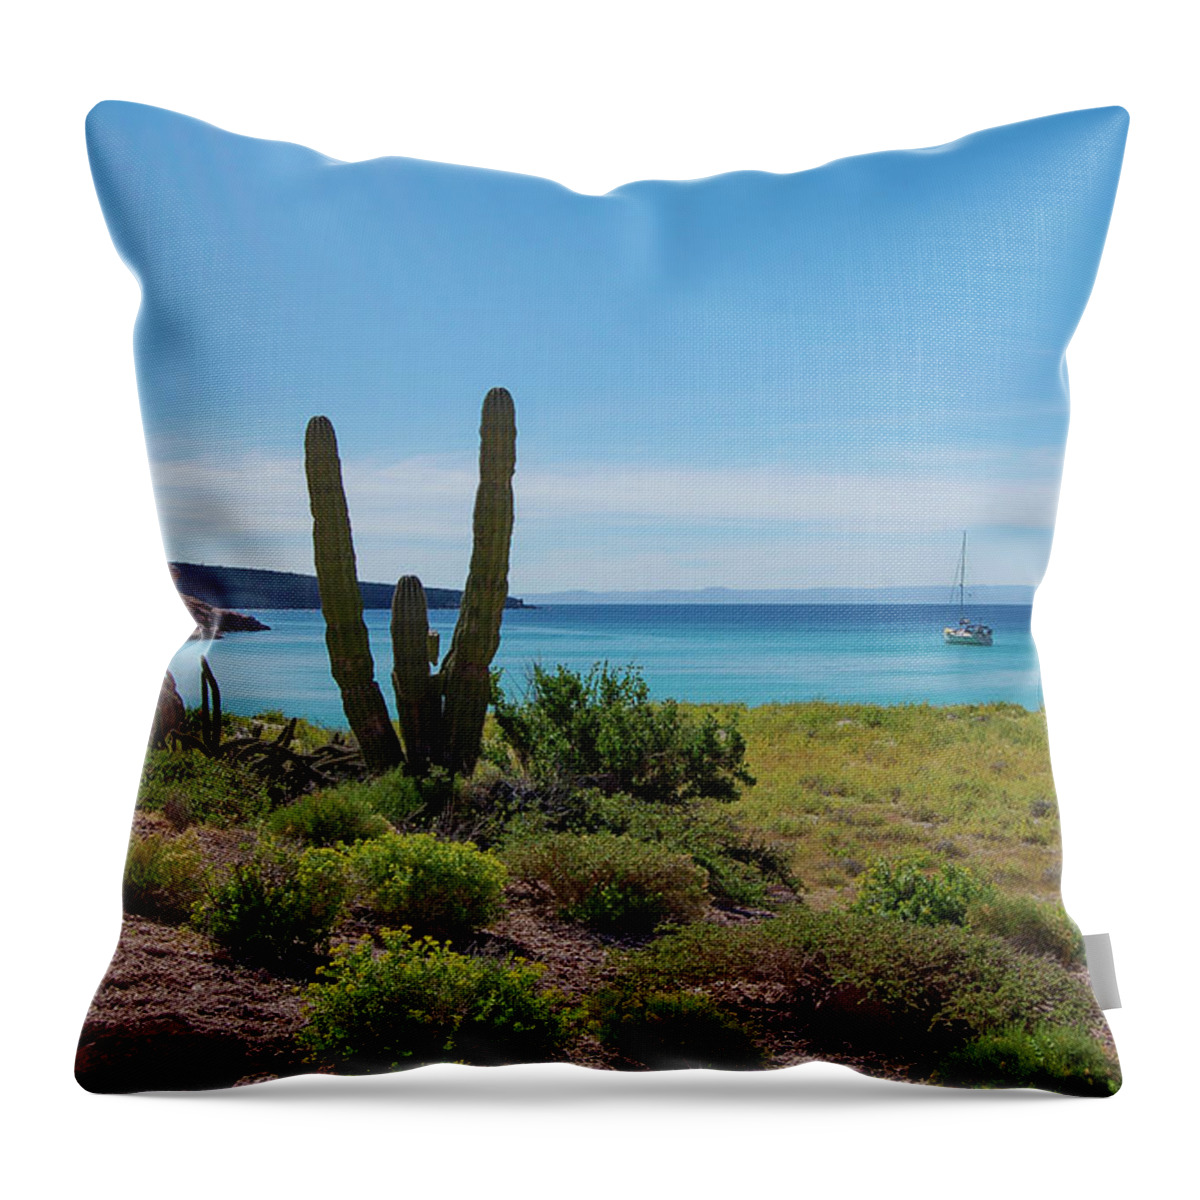 Bahia Ensenada Throw Pillow featuring the photograph Bahia Ensenada by William Scott Koenig